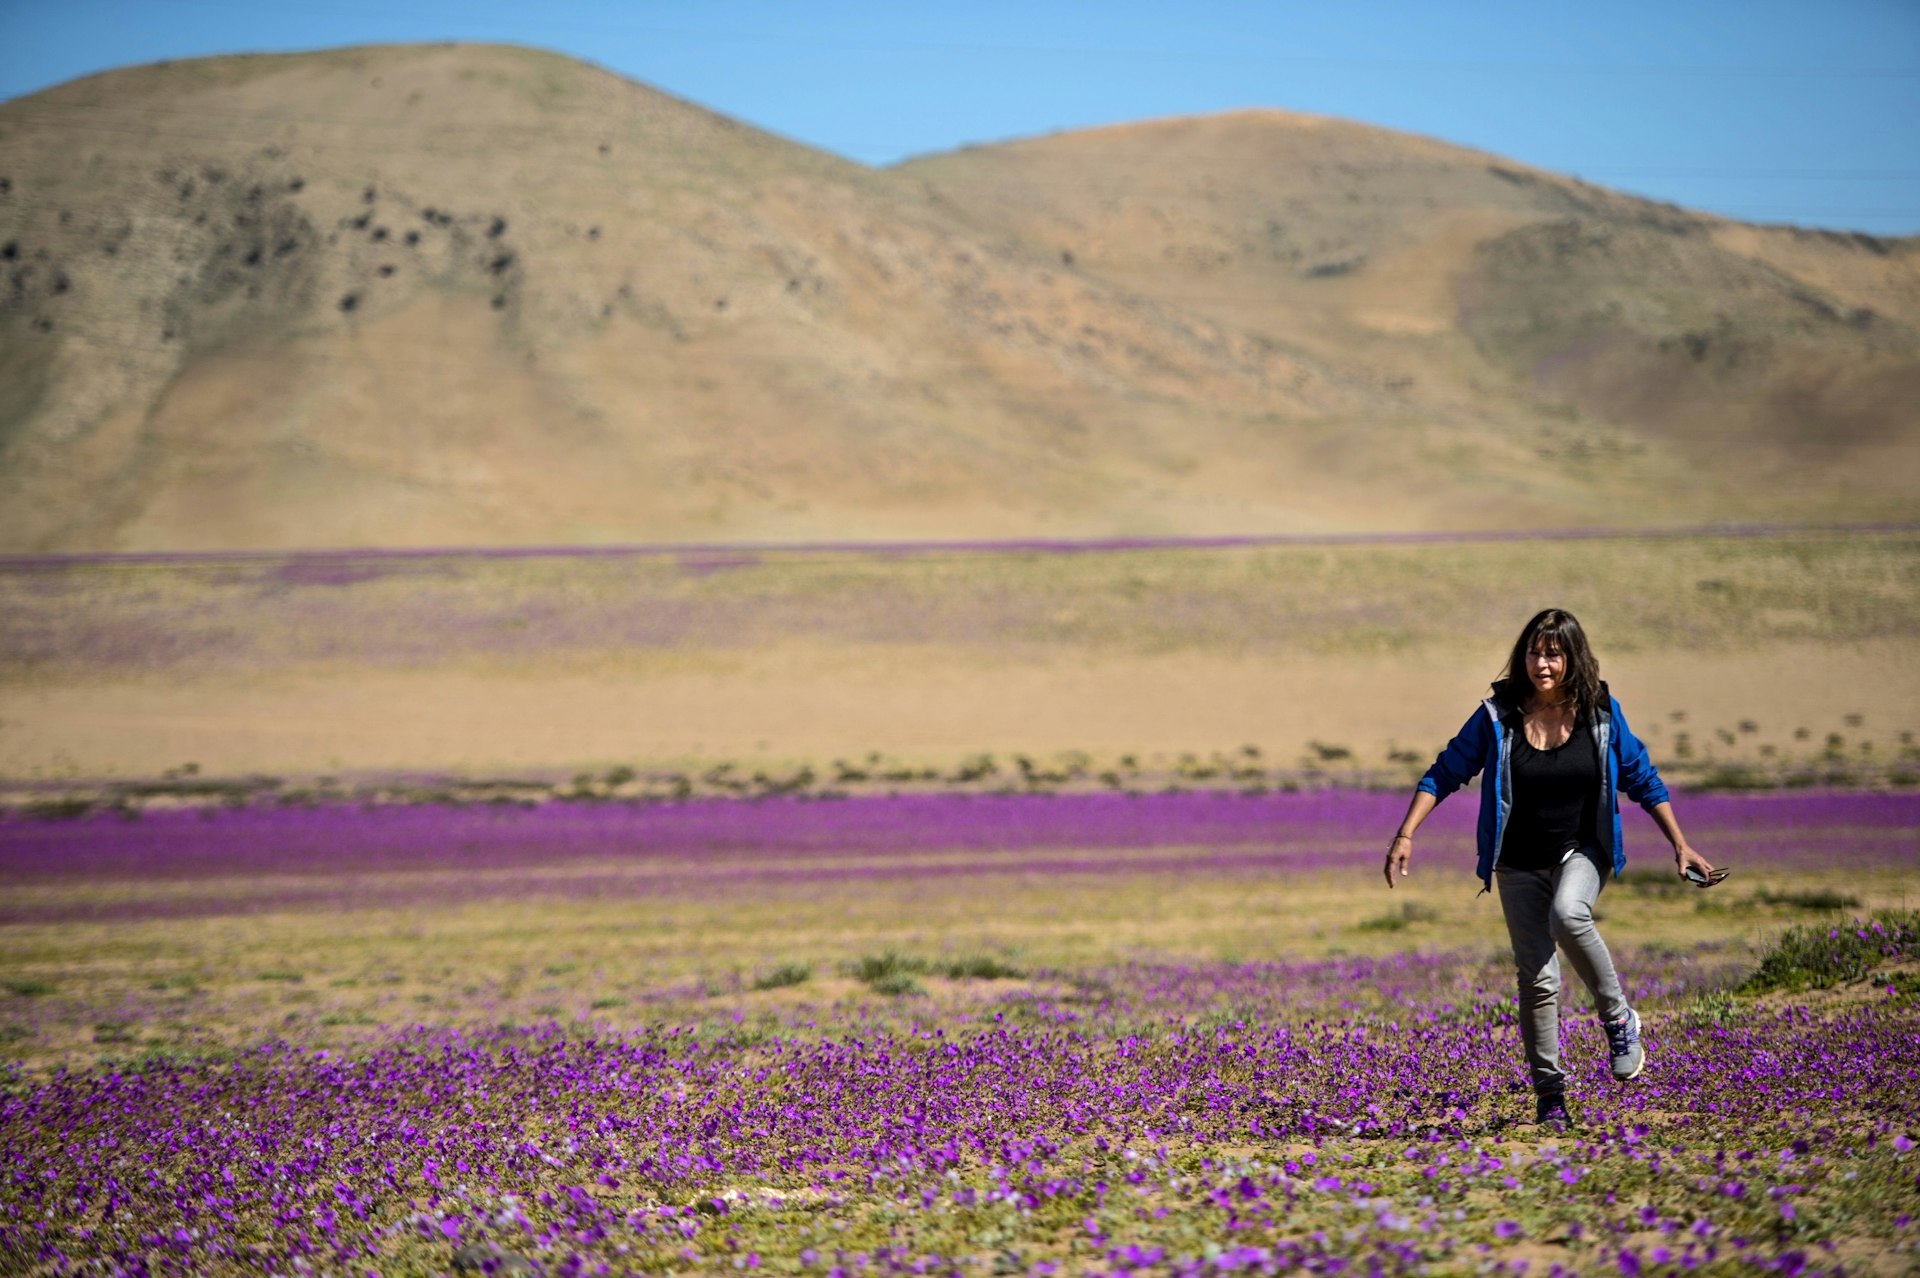 A woman walks on purple flowers in bloom during a “desierto florido” in the Atacama Desert, Copiapó, Chile 